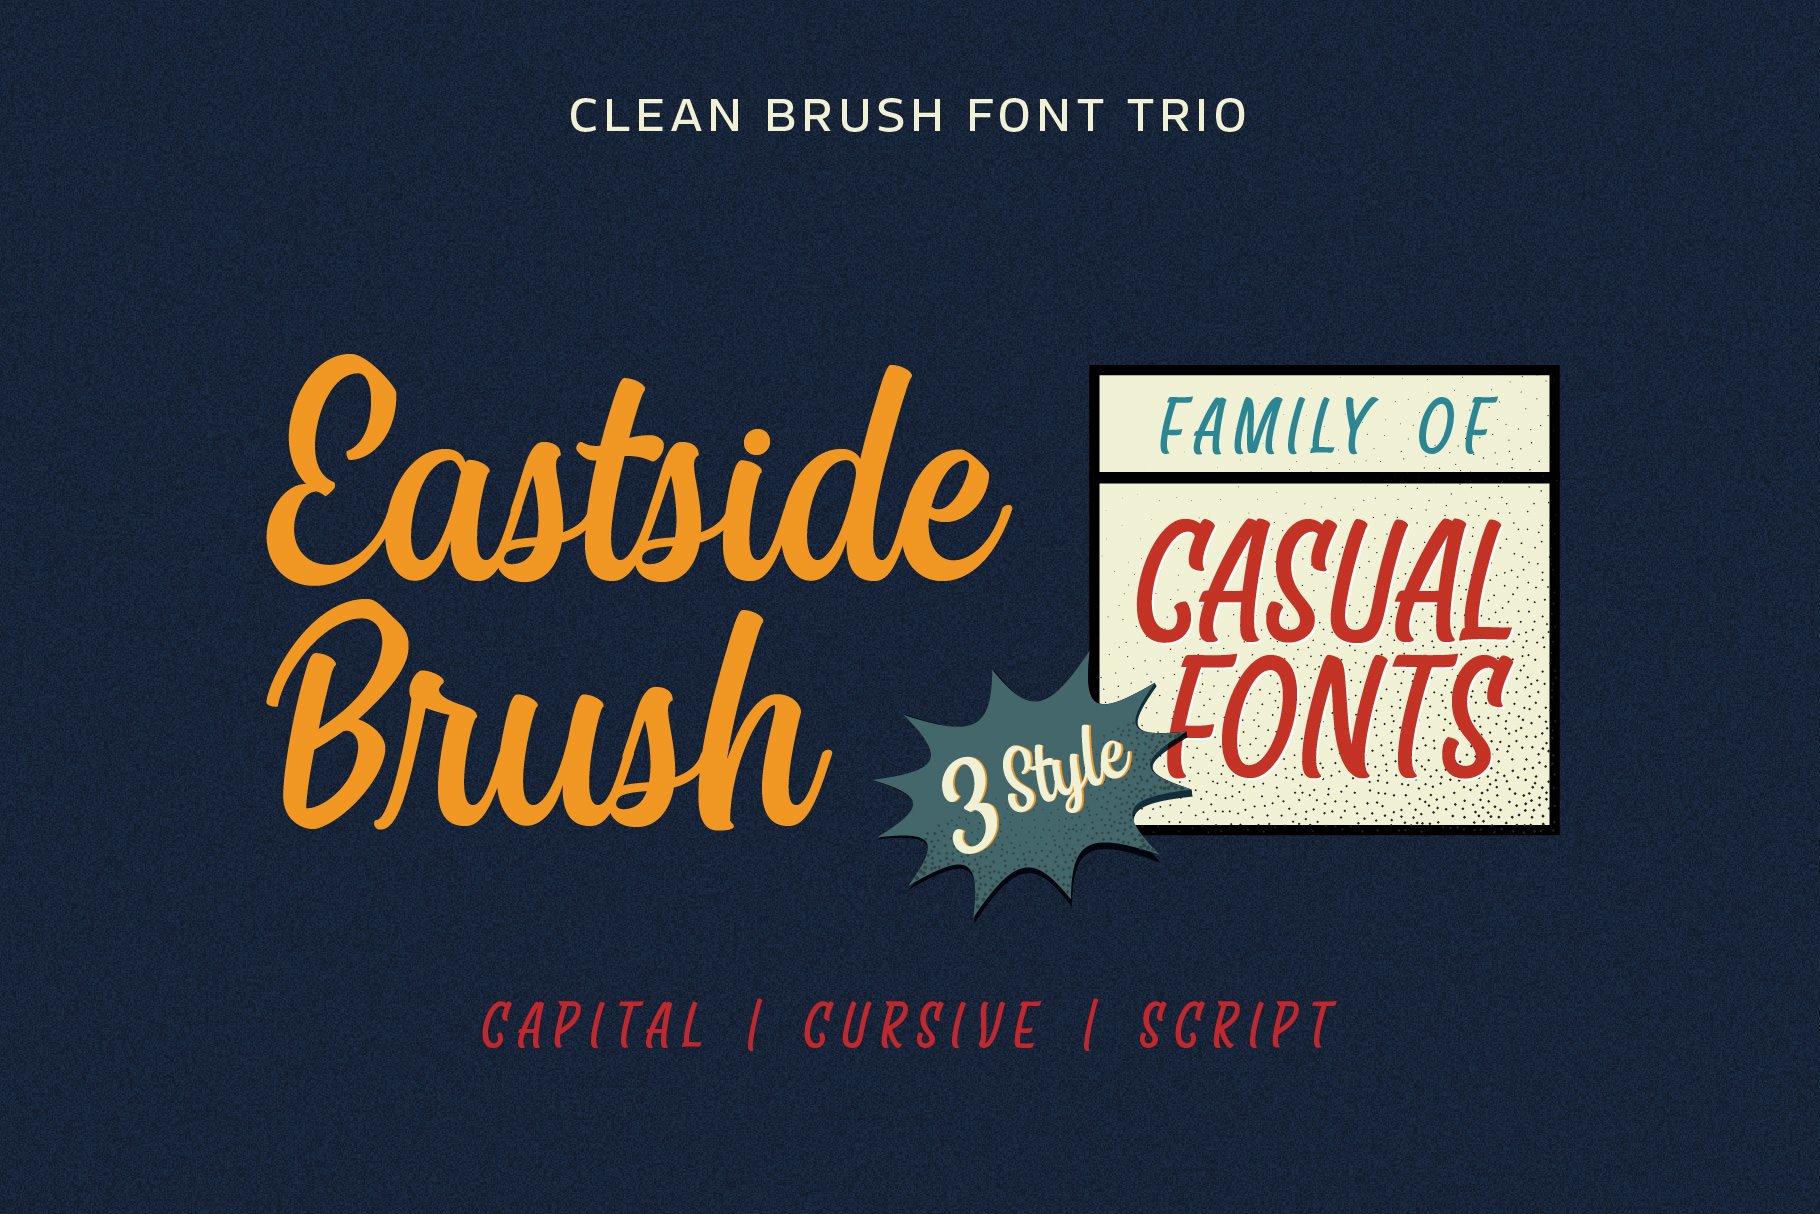 East Side Brush Fonts